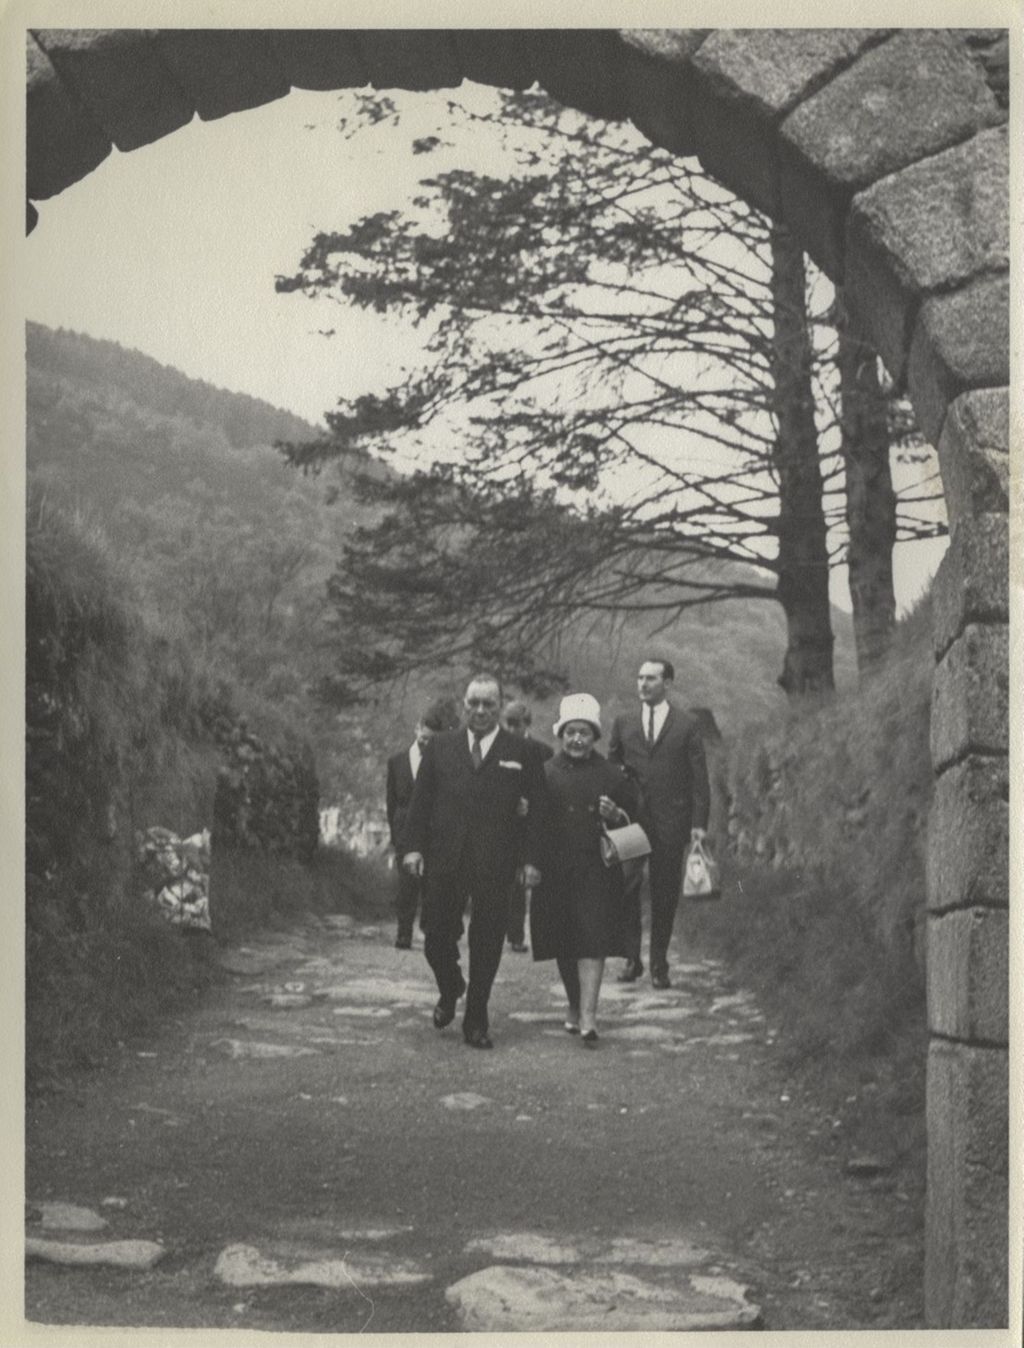 Trip to Ireland, Richard J. and Eleanor Daley walking along a lane